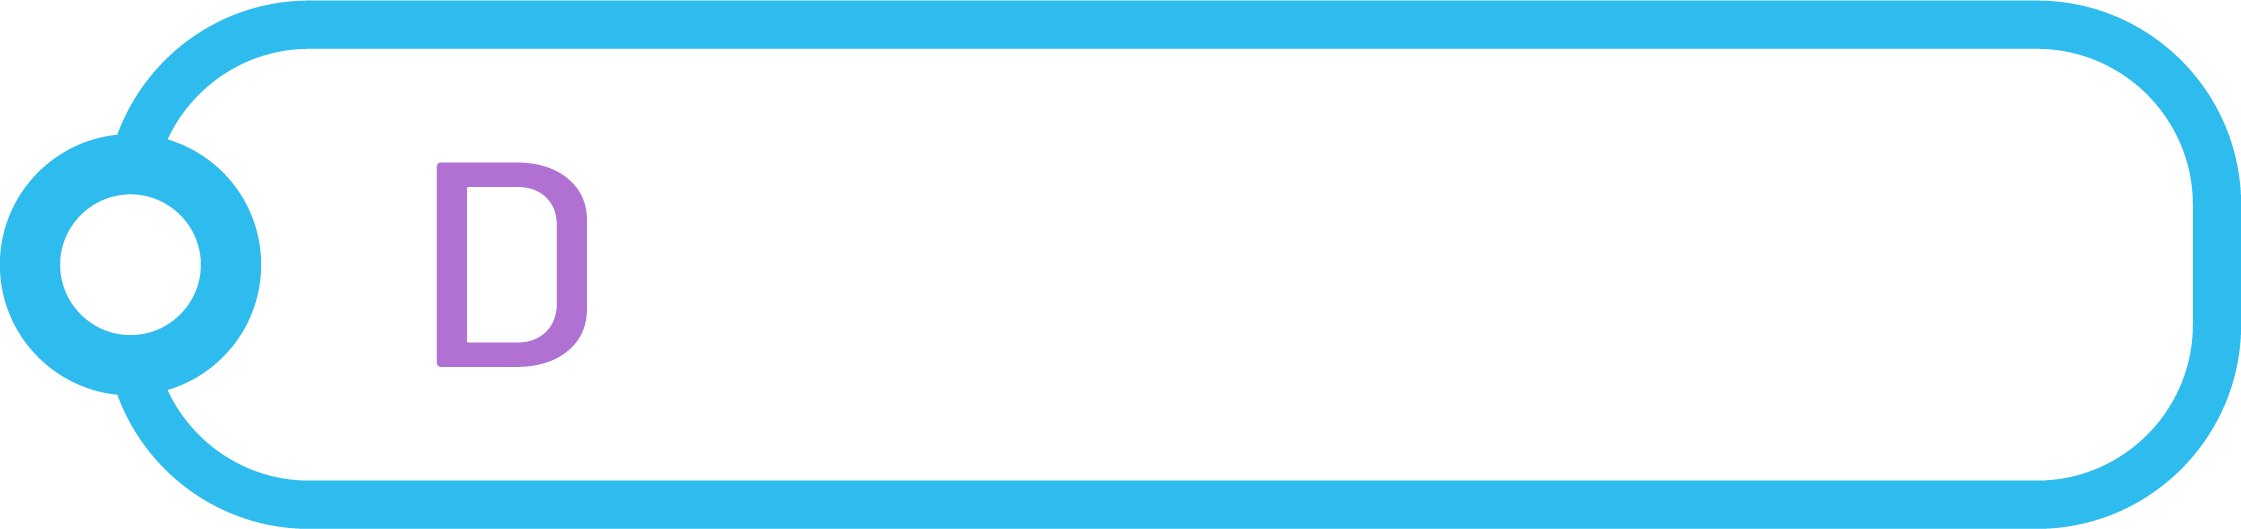 Dammid logo alternative